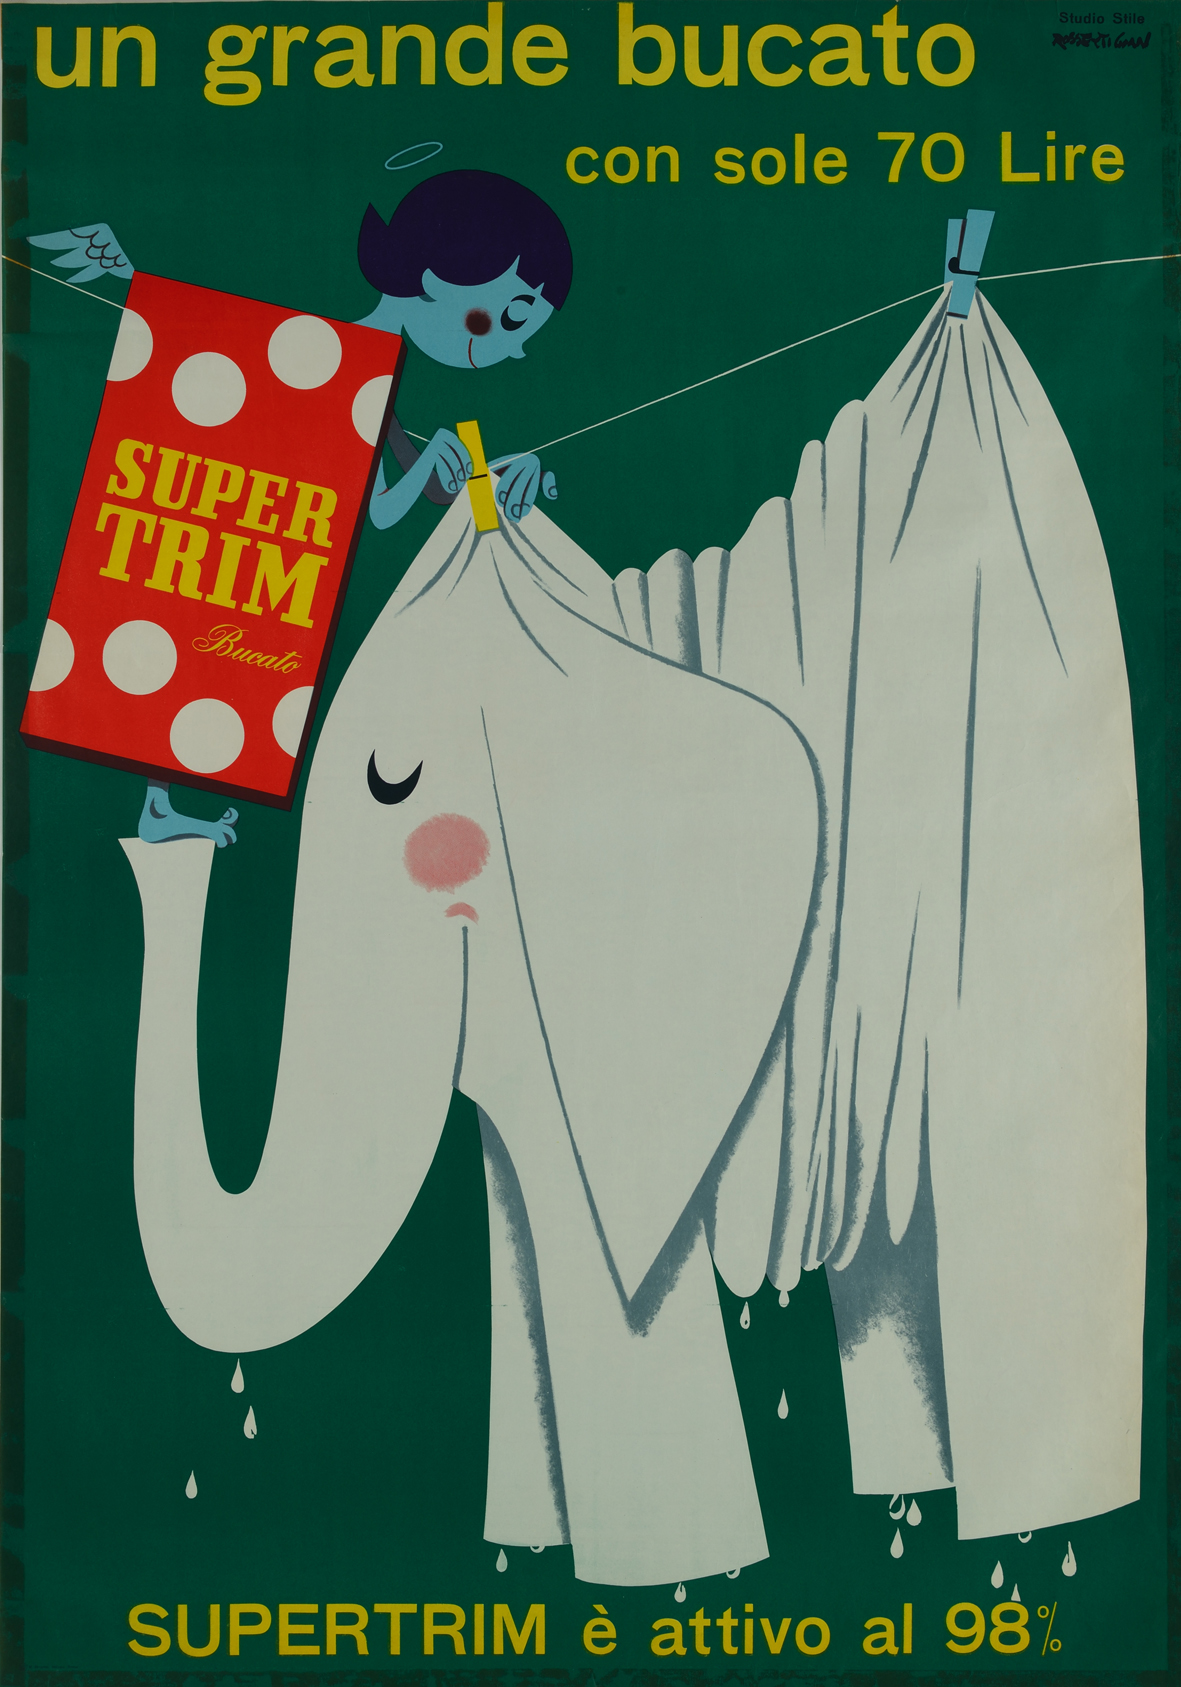 Gian Carlo Rossetti per Studio Stile, Supertrim, 1957 ca. (fondo verde/elefante)